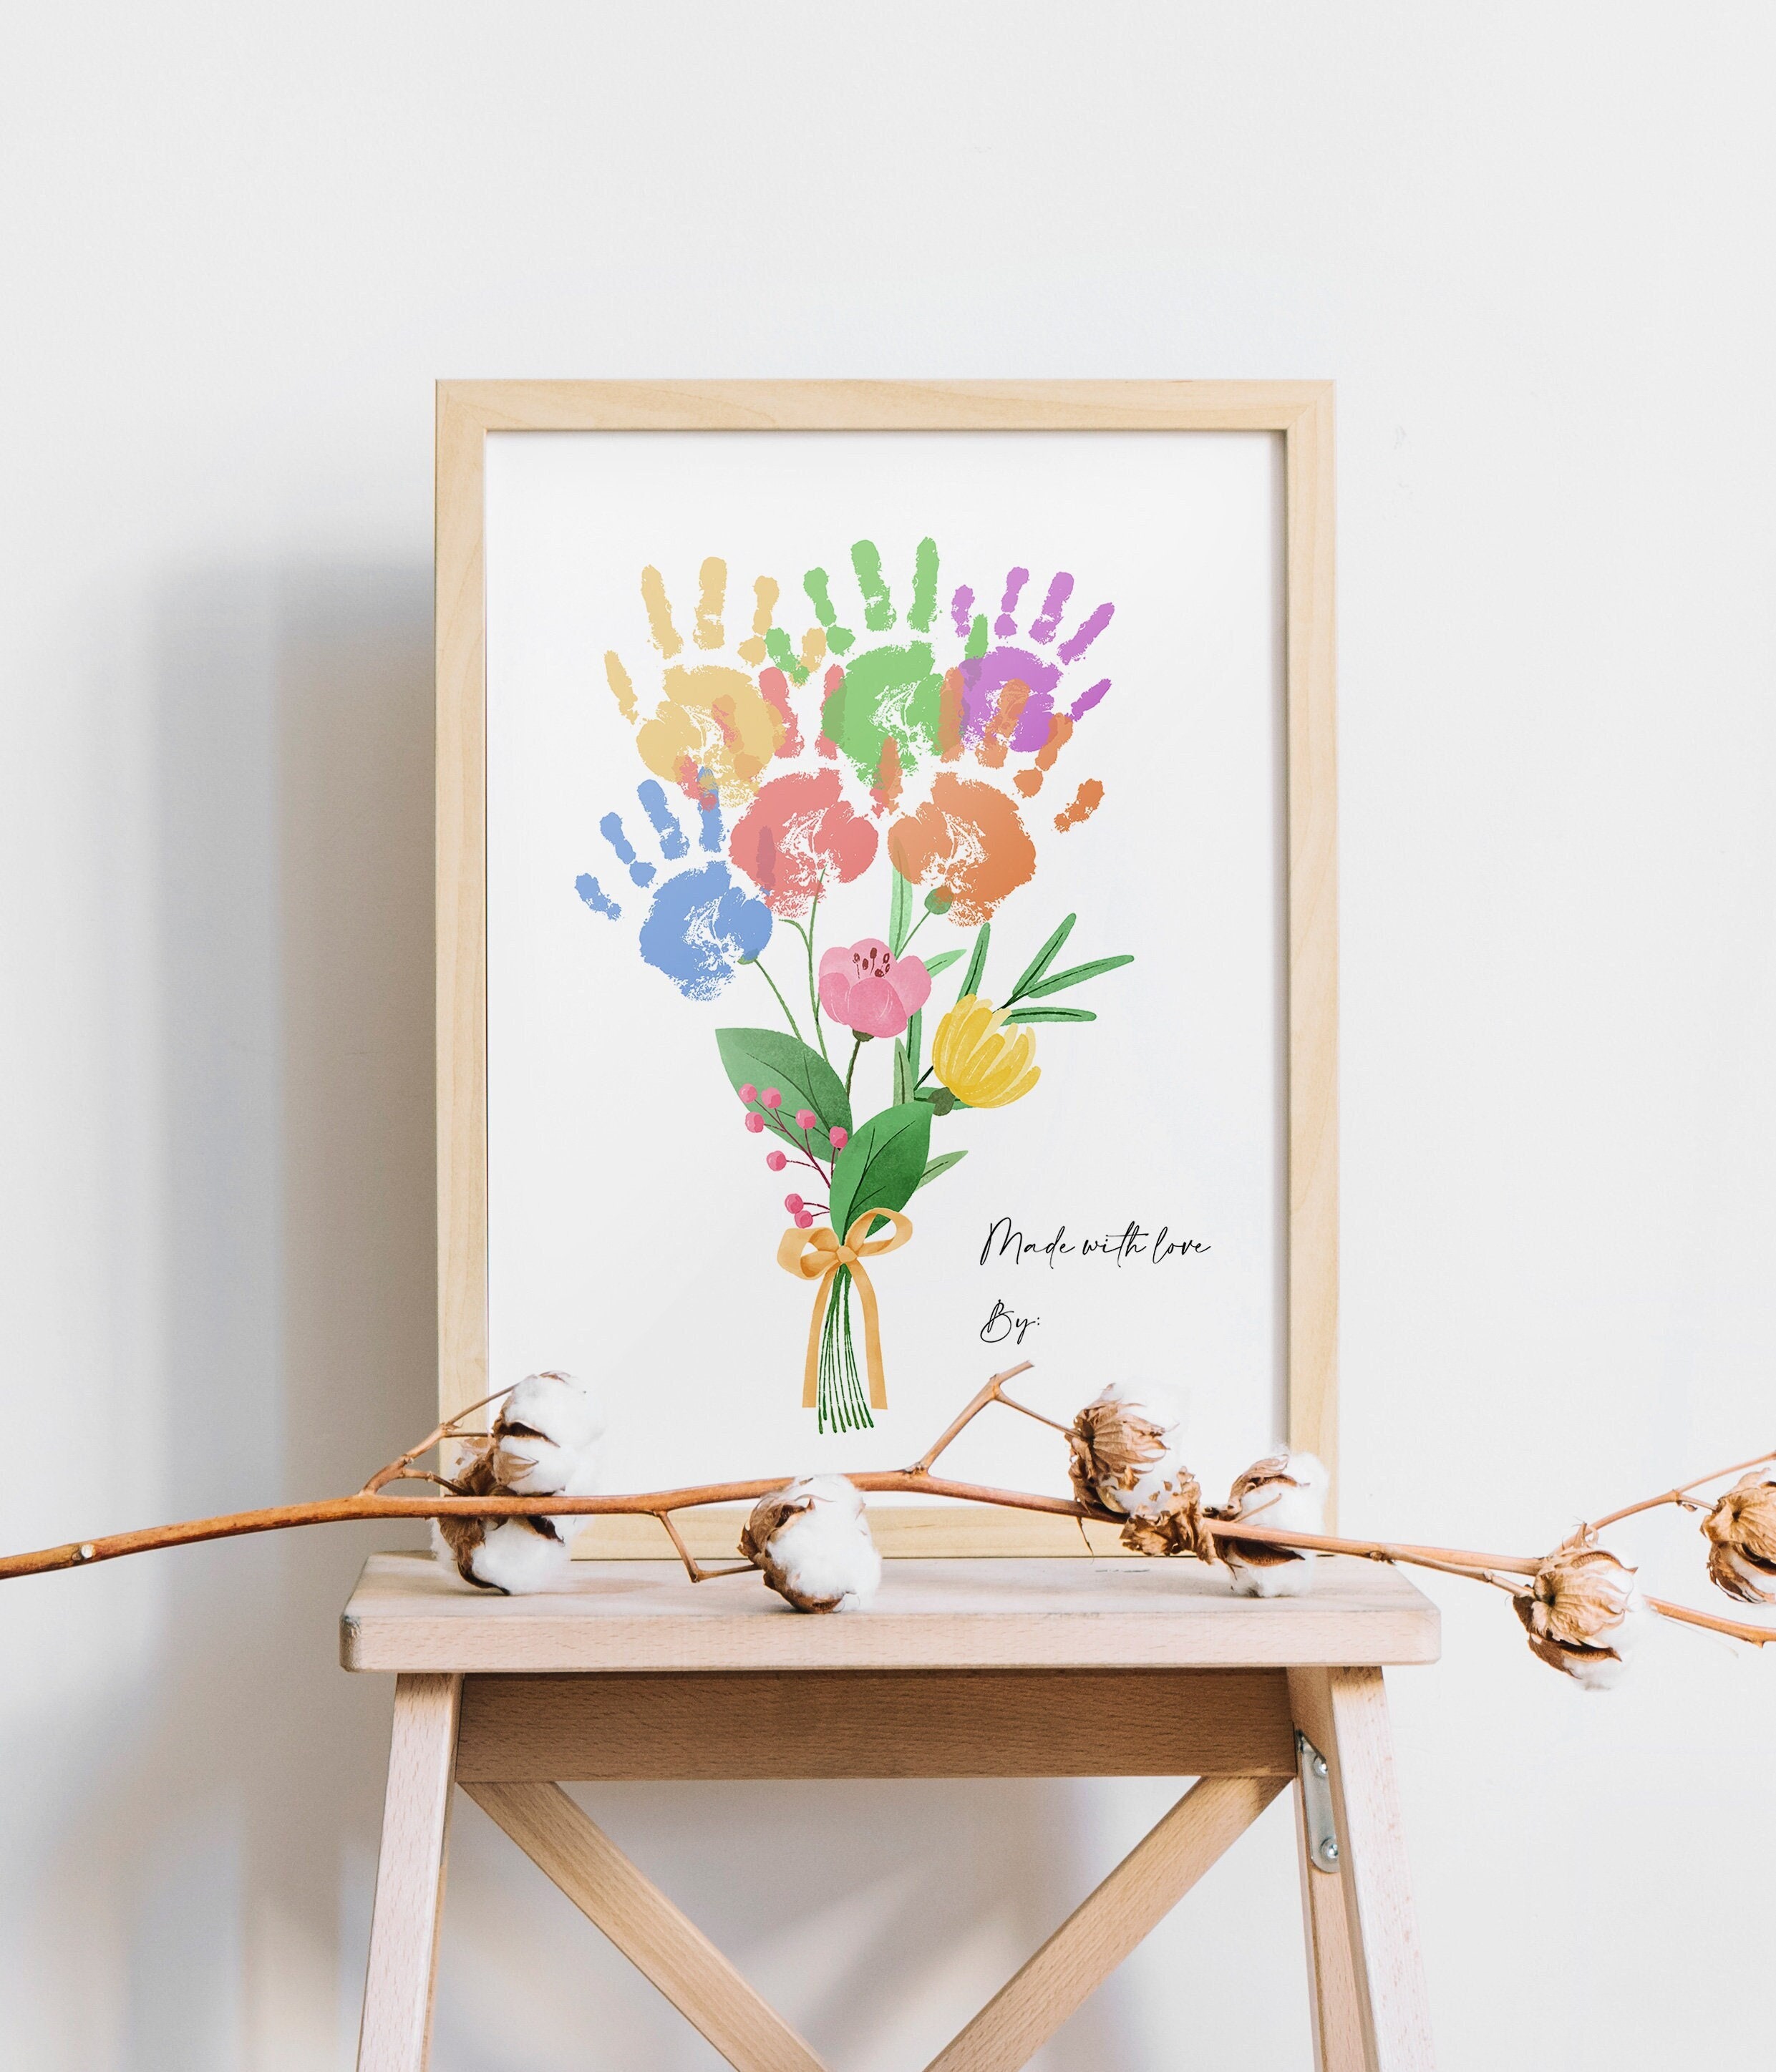 Your Custom Family Handprint Portrait Art on Canvas New Parents